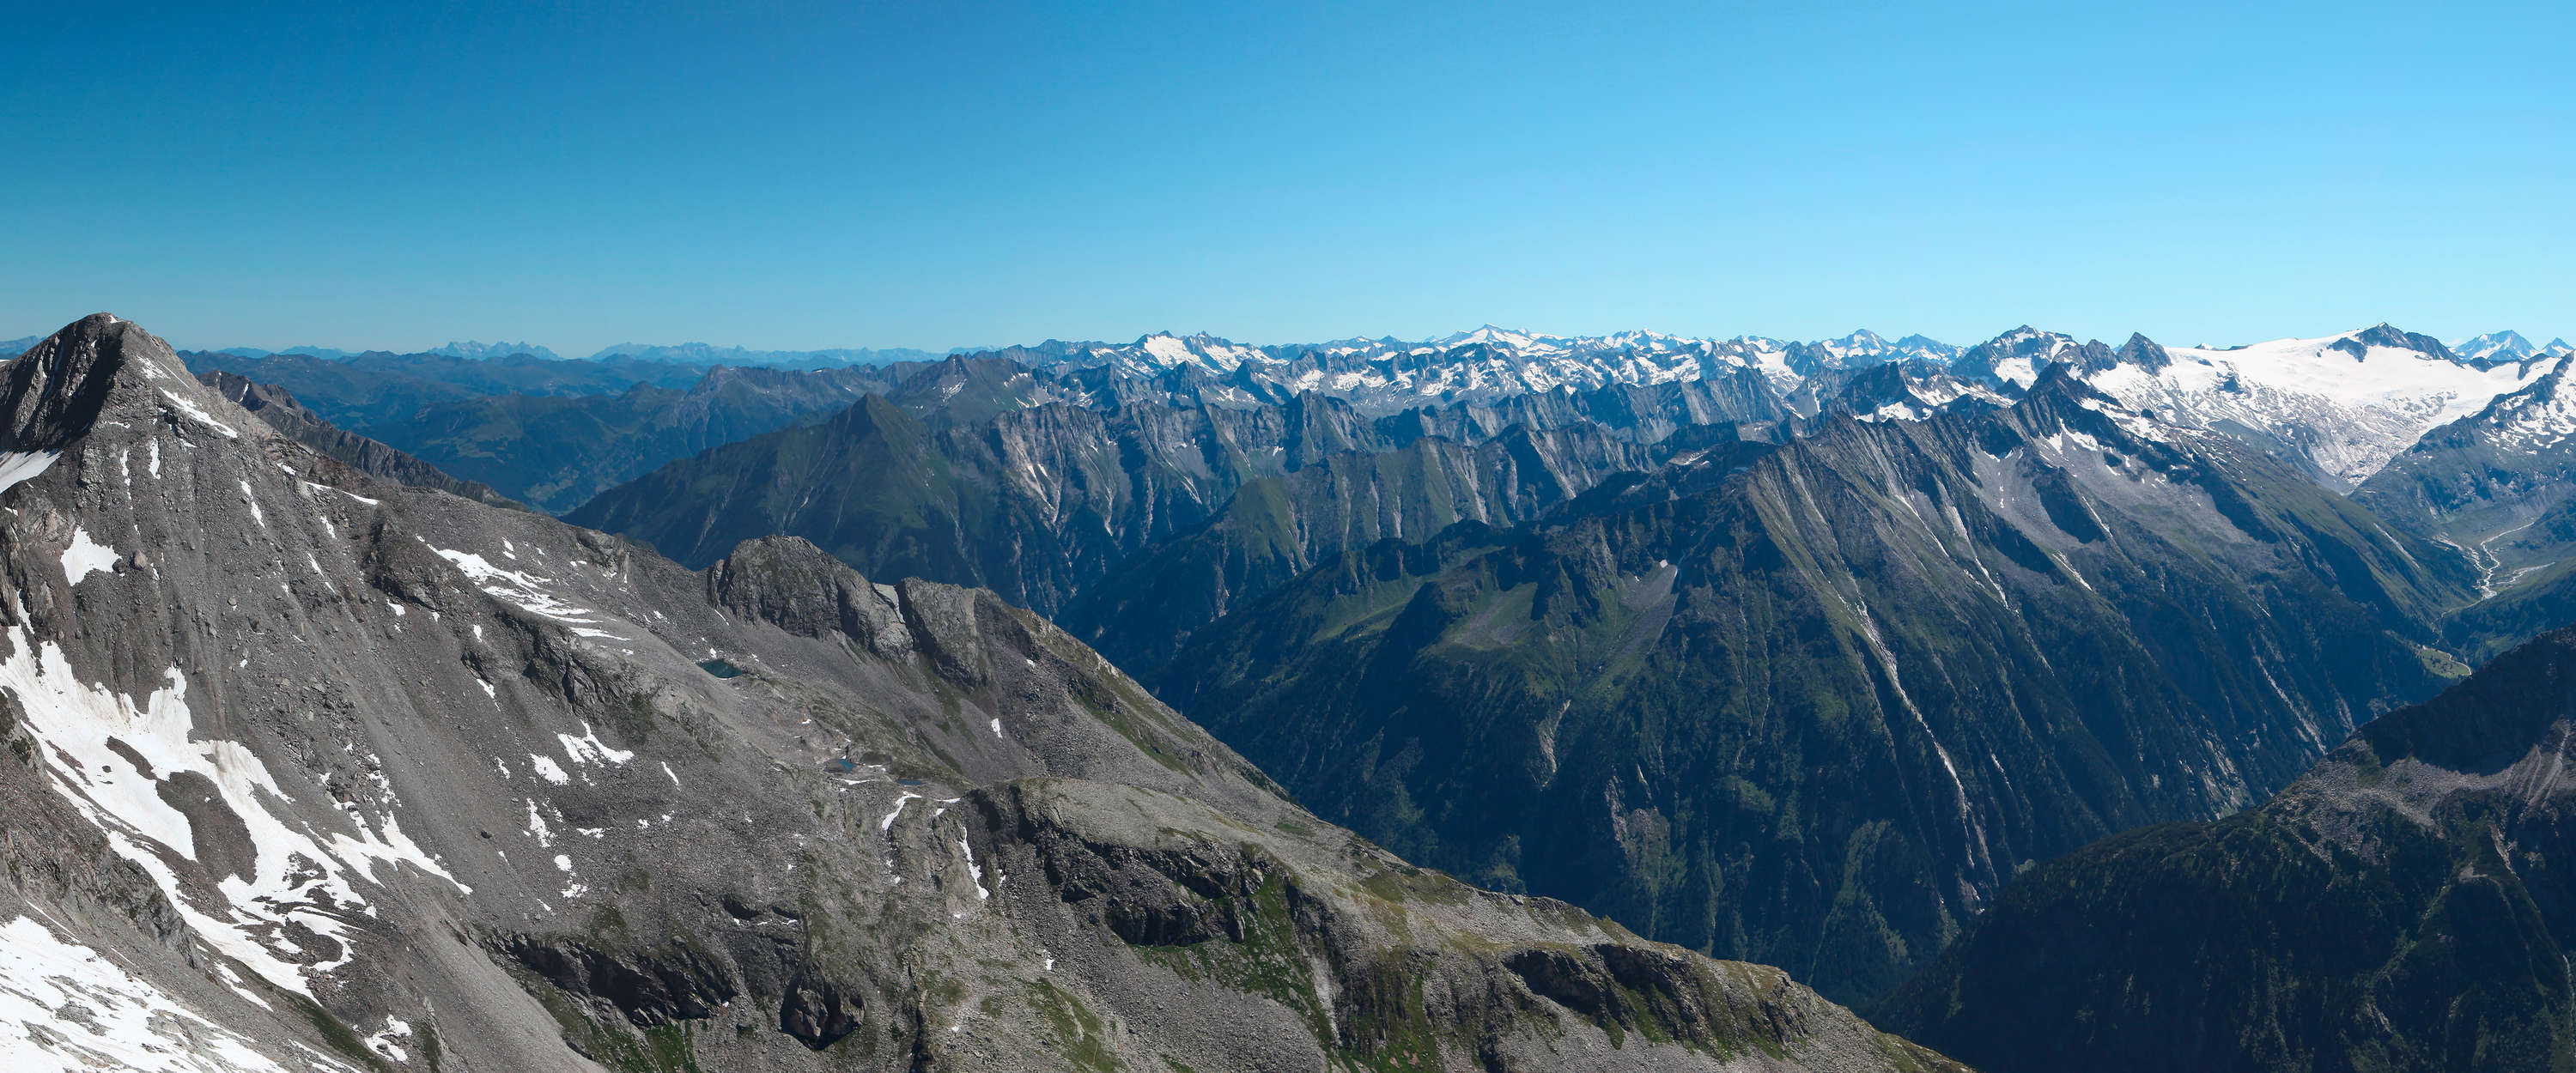             Mural panorámico con montañas alpinas escarpadas
        